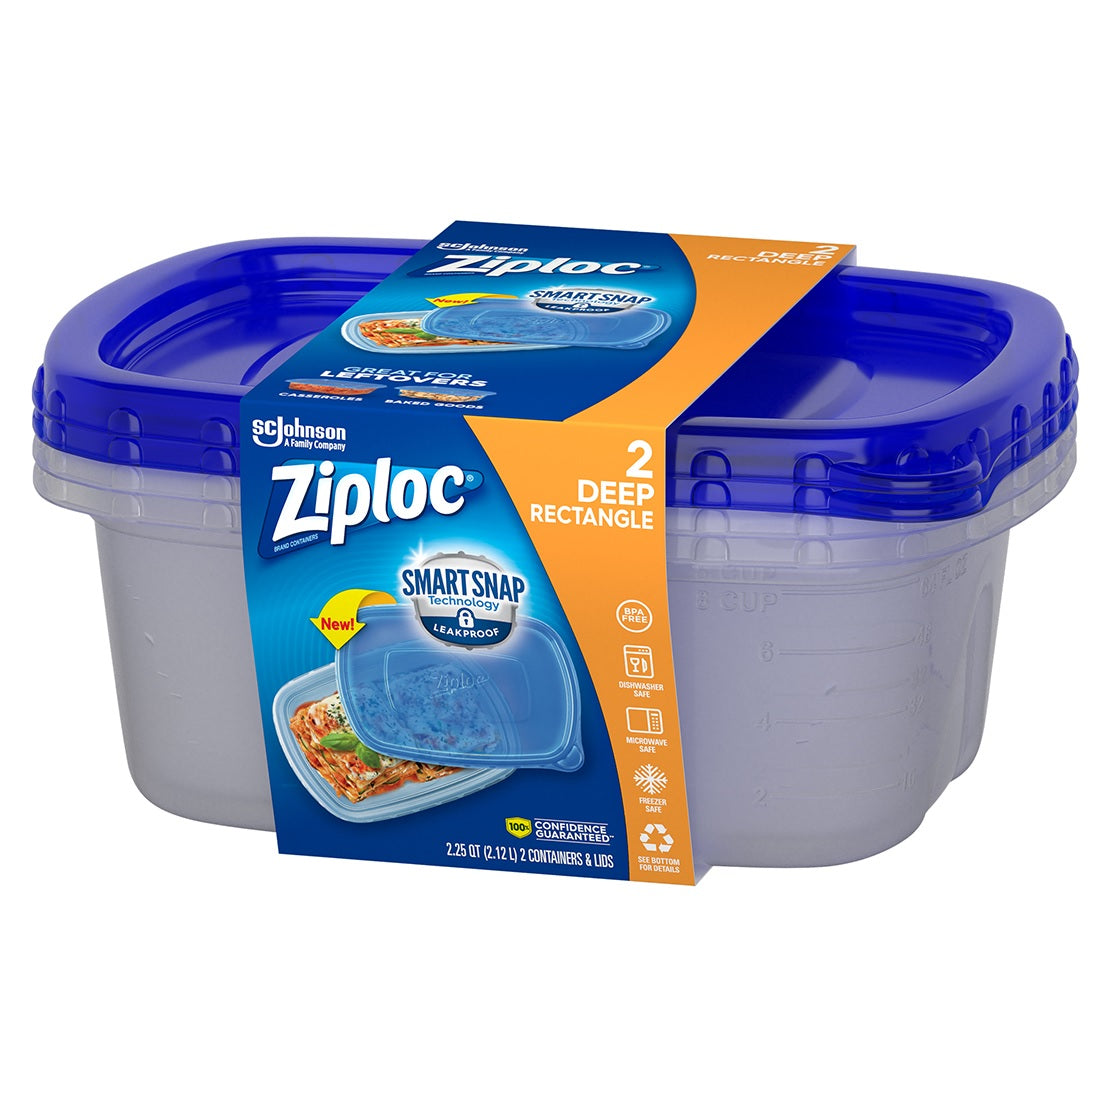 Ziploc 7 Piece Plastic Food Storage Container Set Clear - Office Depot